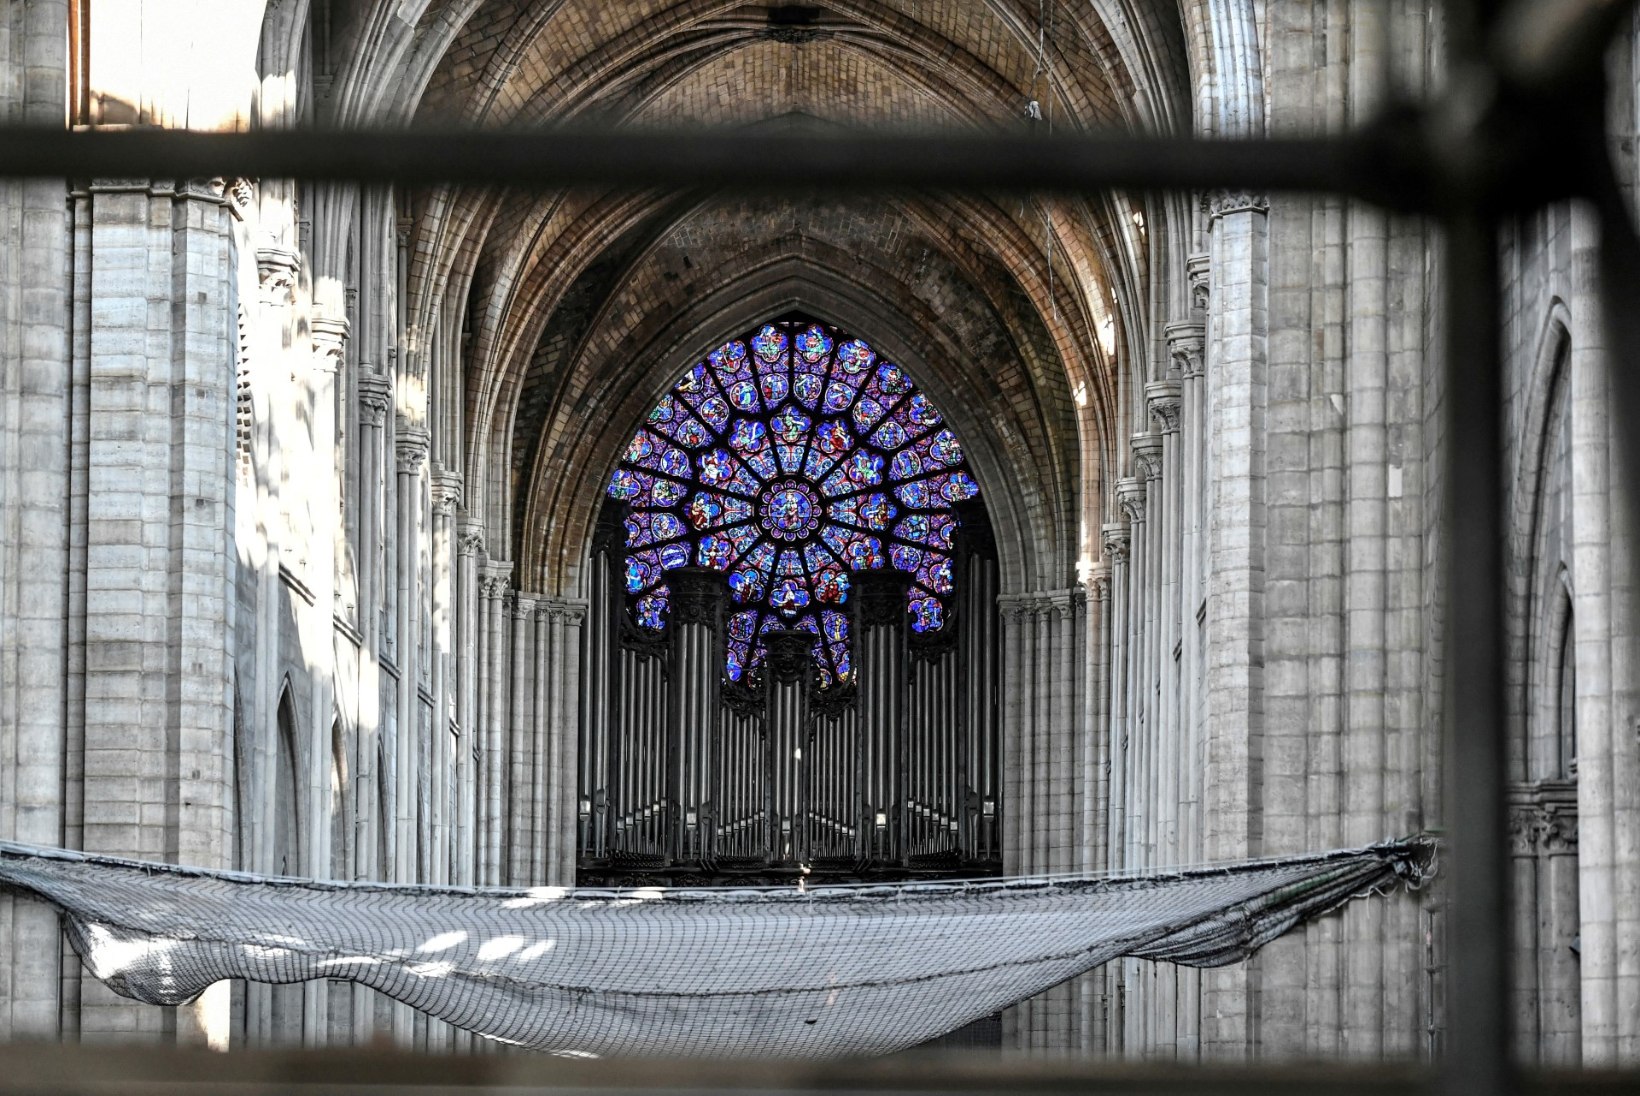 Notre Dame’i katedraali orel võetakse lahti